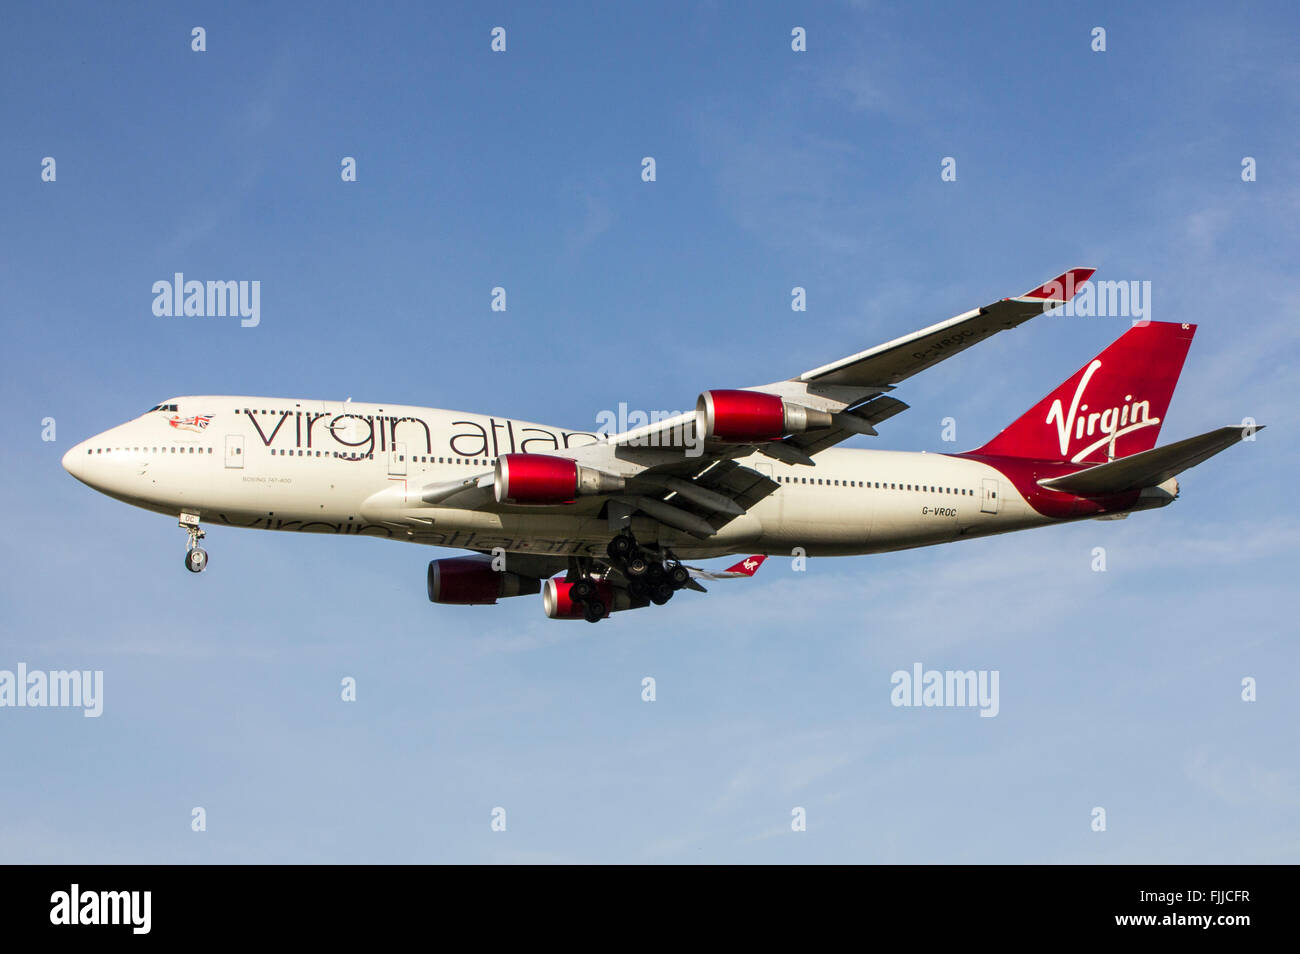 Boeing 747 Virgin Atlantic Airlines Landing at LHR London Heathrow Airport Stock Photo